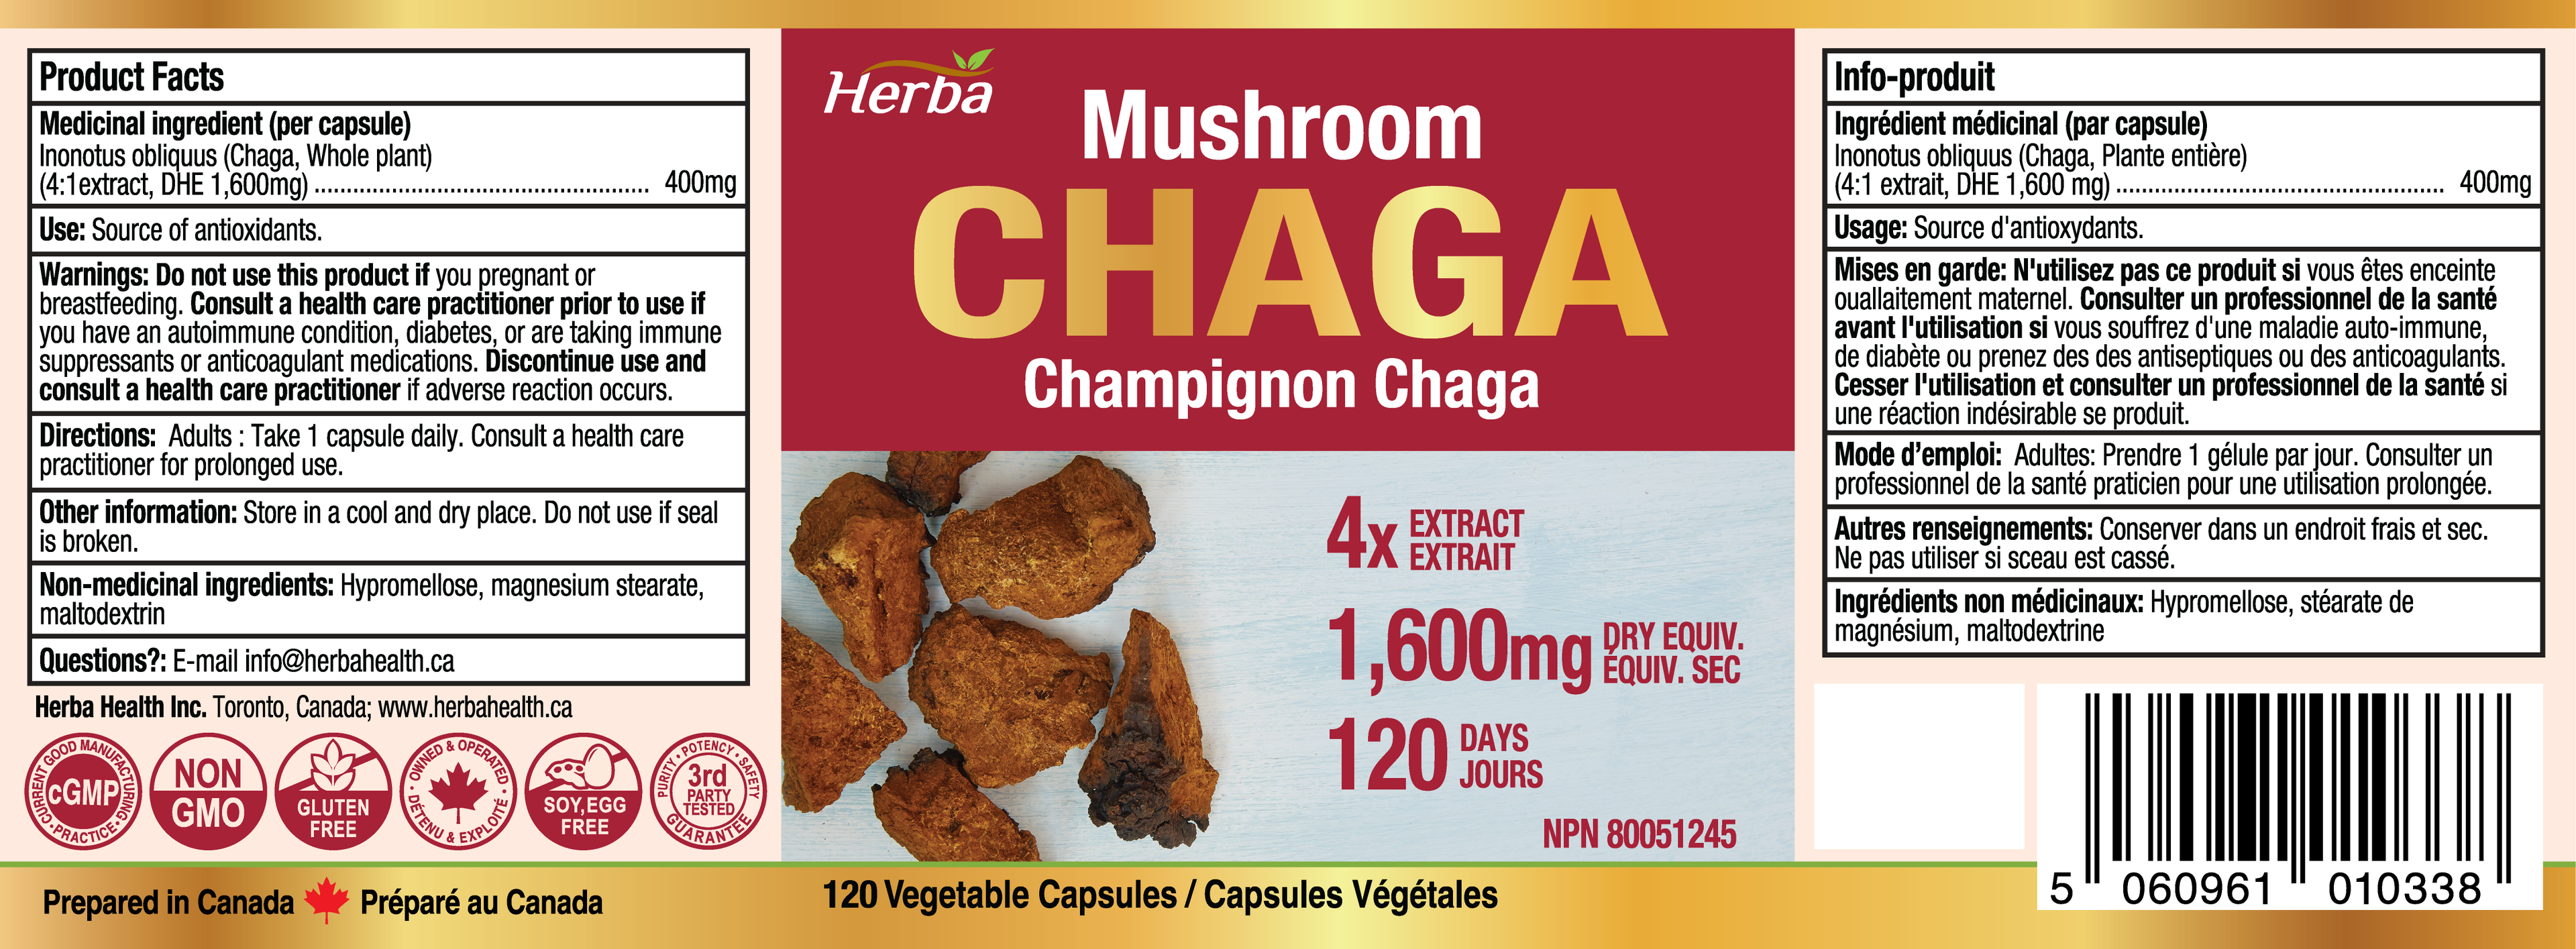 buy chaga mushroom made in Canada